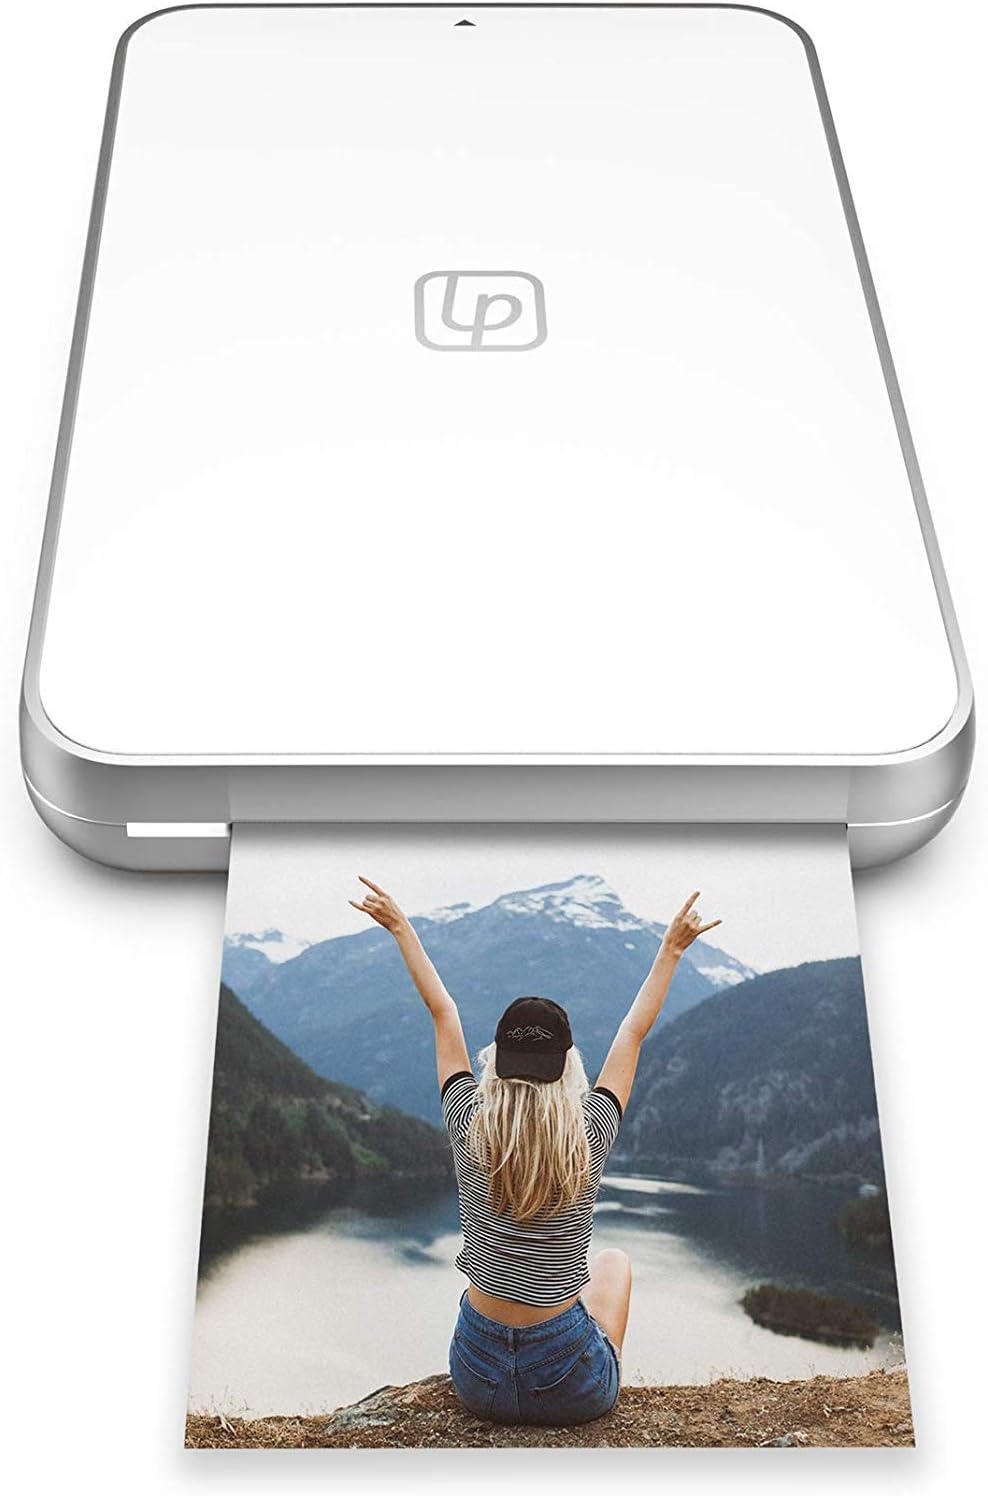 Lifeprint 2x3 Ultra Slim Portable Photo and Video Printer, Portable Printer for iPhone and Android